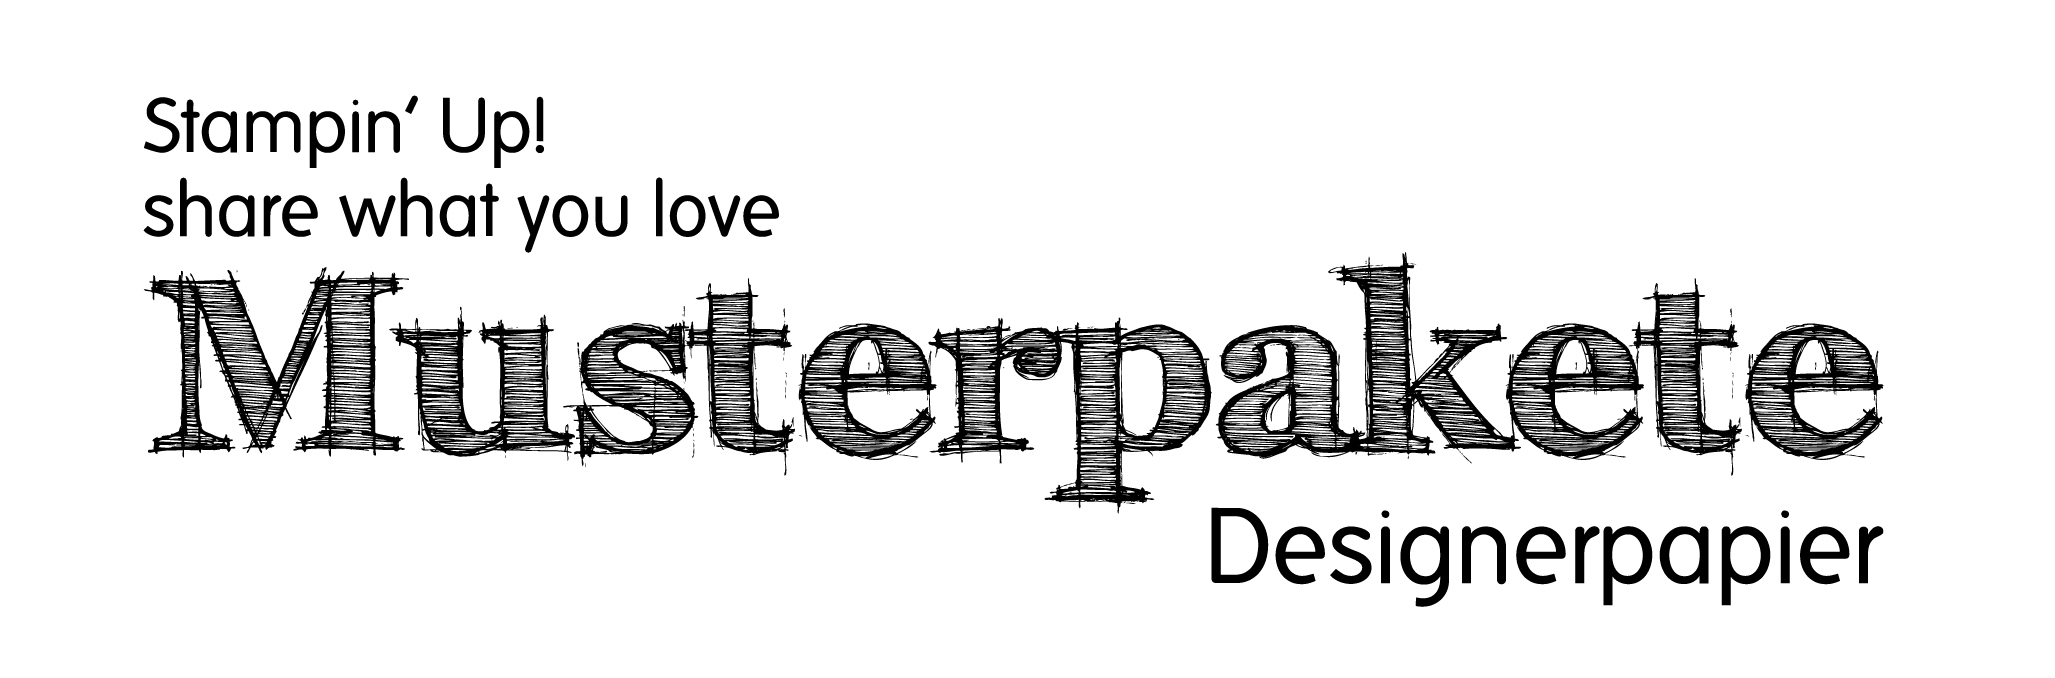 Logo DSP